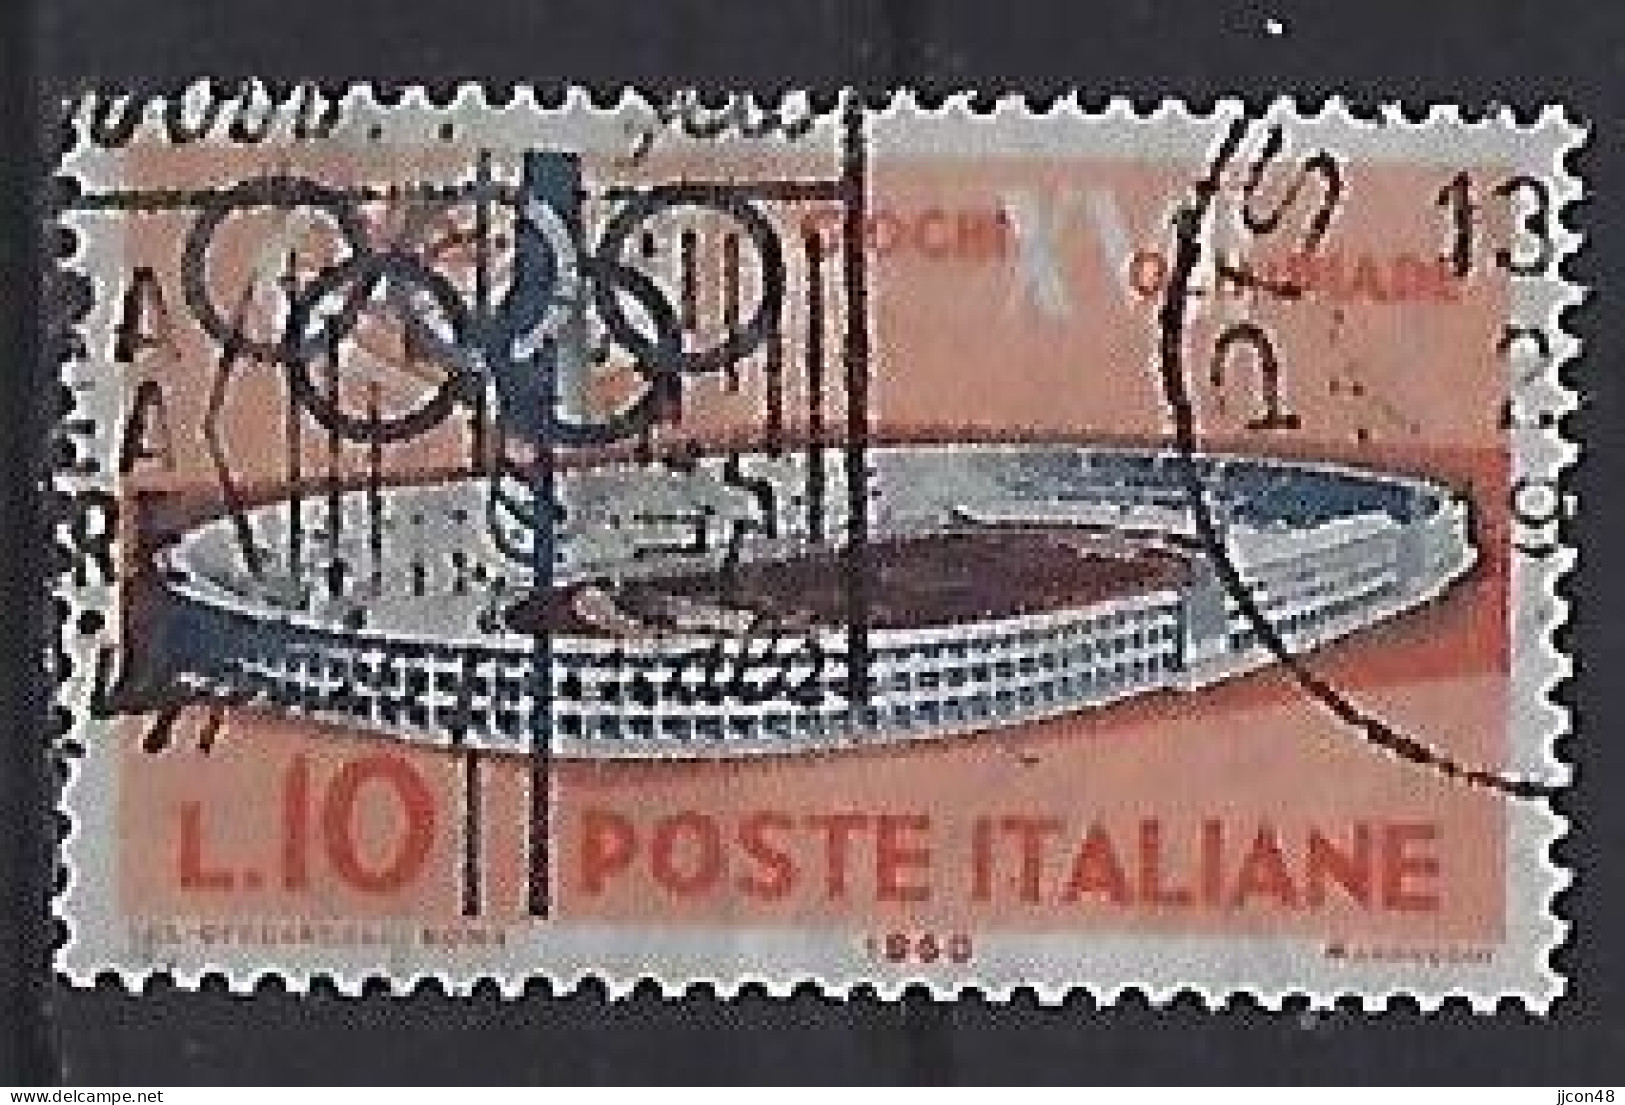 Italy 1960  Olympische Sommerspielen, Rom (o) Mi.1065 - 1946-60: Used